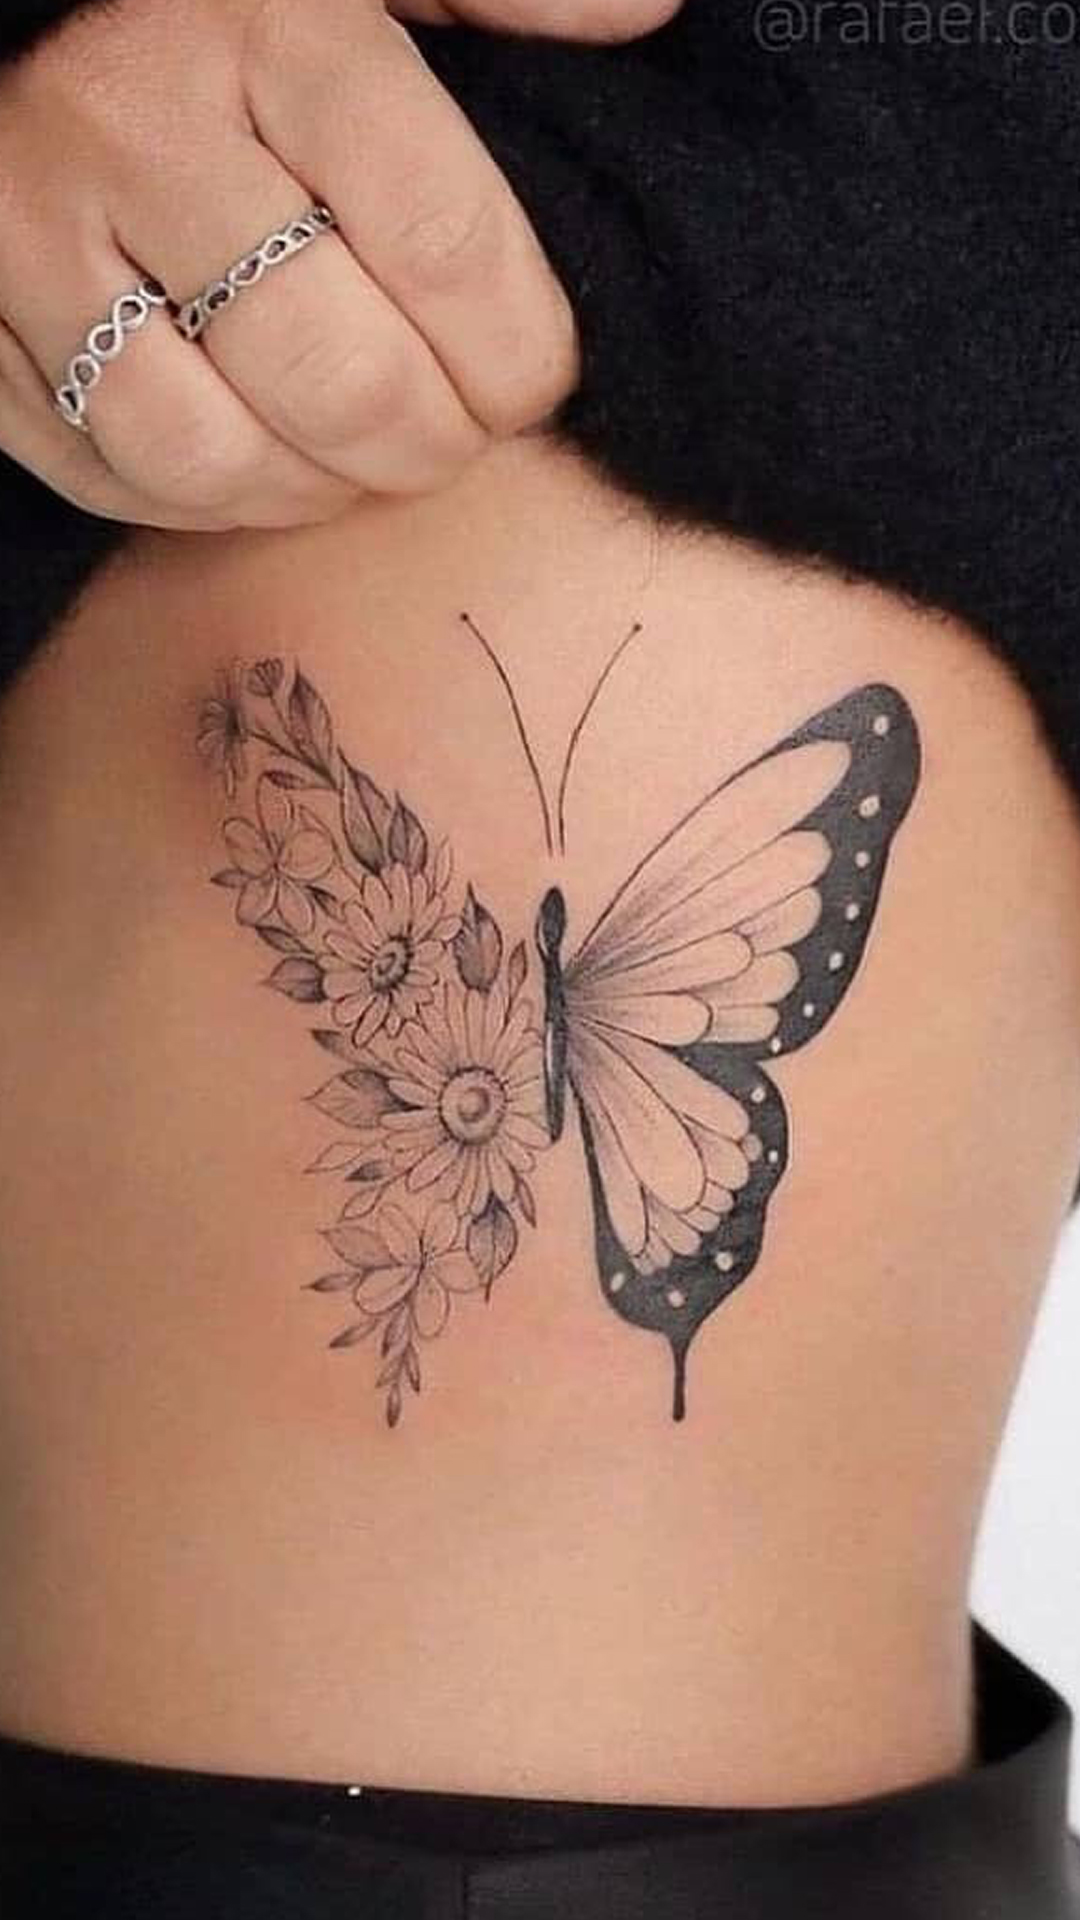 tatuagem-de-borboleta-no-braco-49 